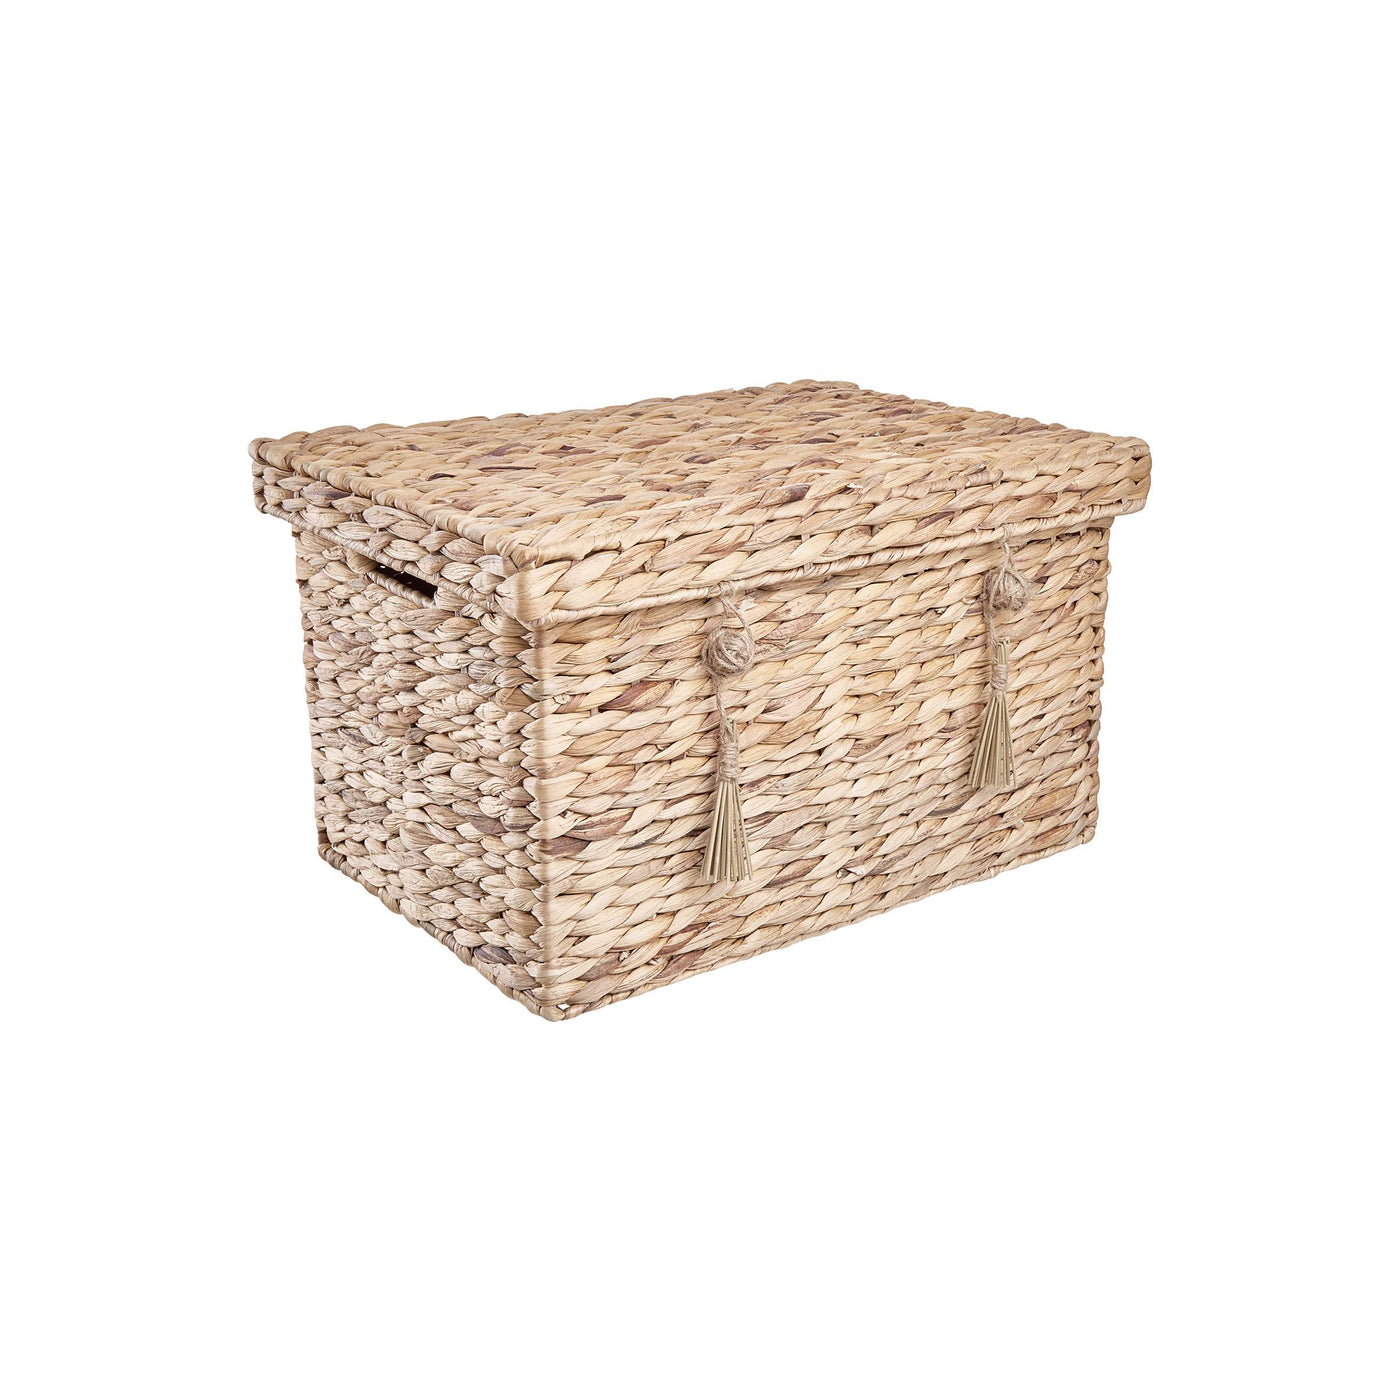 RUSH ROPE Basket with lid rectangular L 43 x W 30cm